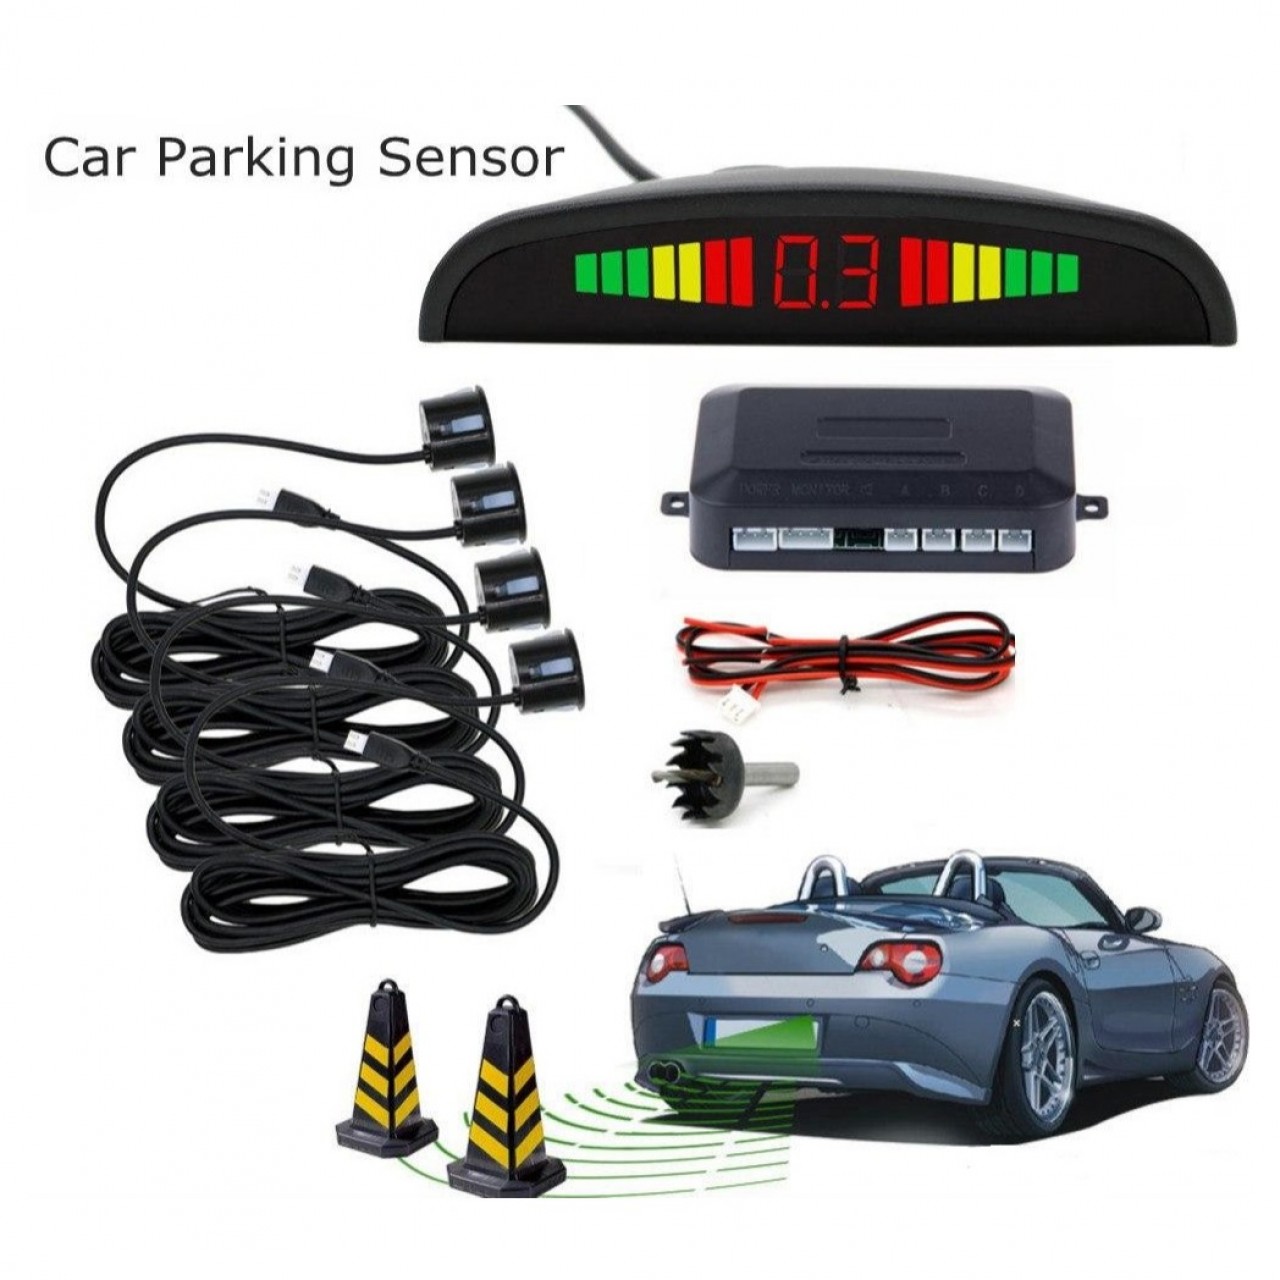 4 in 1 Ultrasonic Car Parking Sensors - LED Display